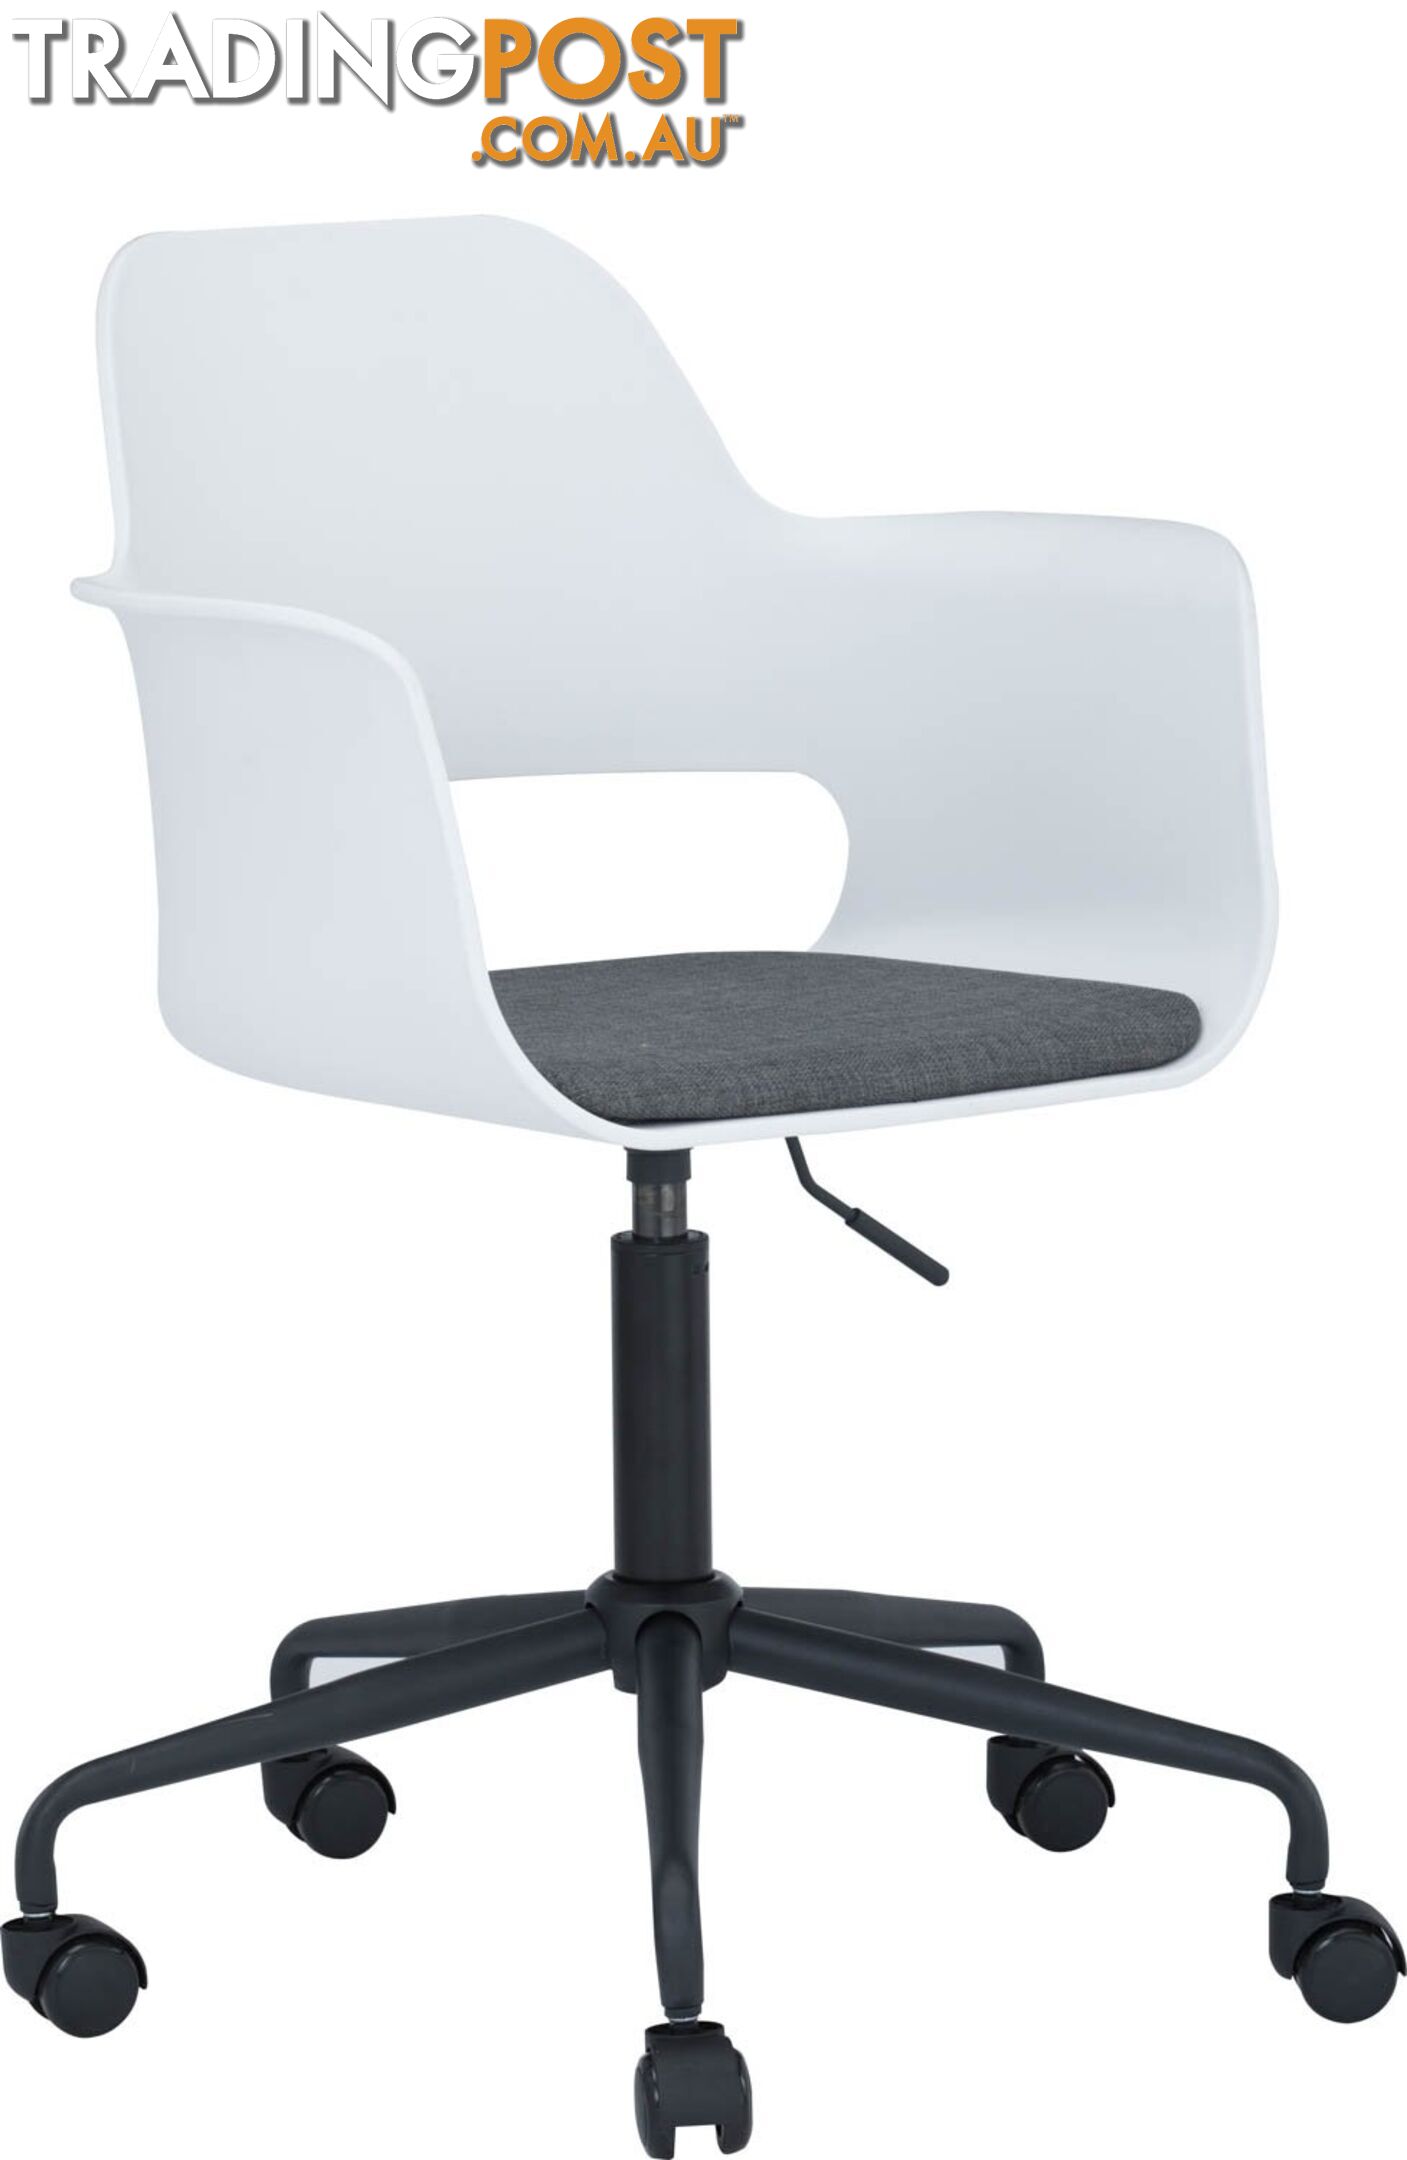 LAXMI Swivel Chair - White - 221002 - 9334719005911